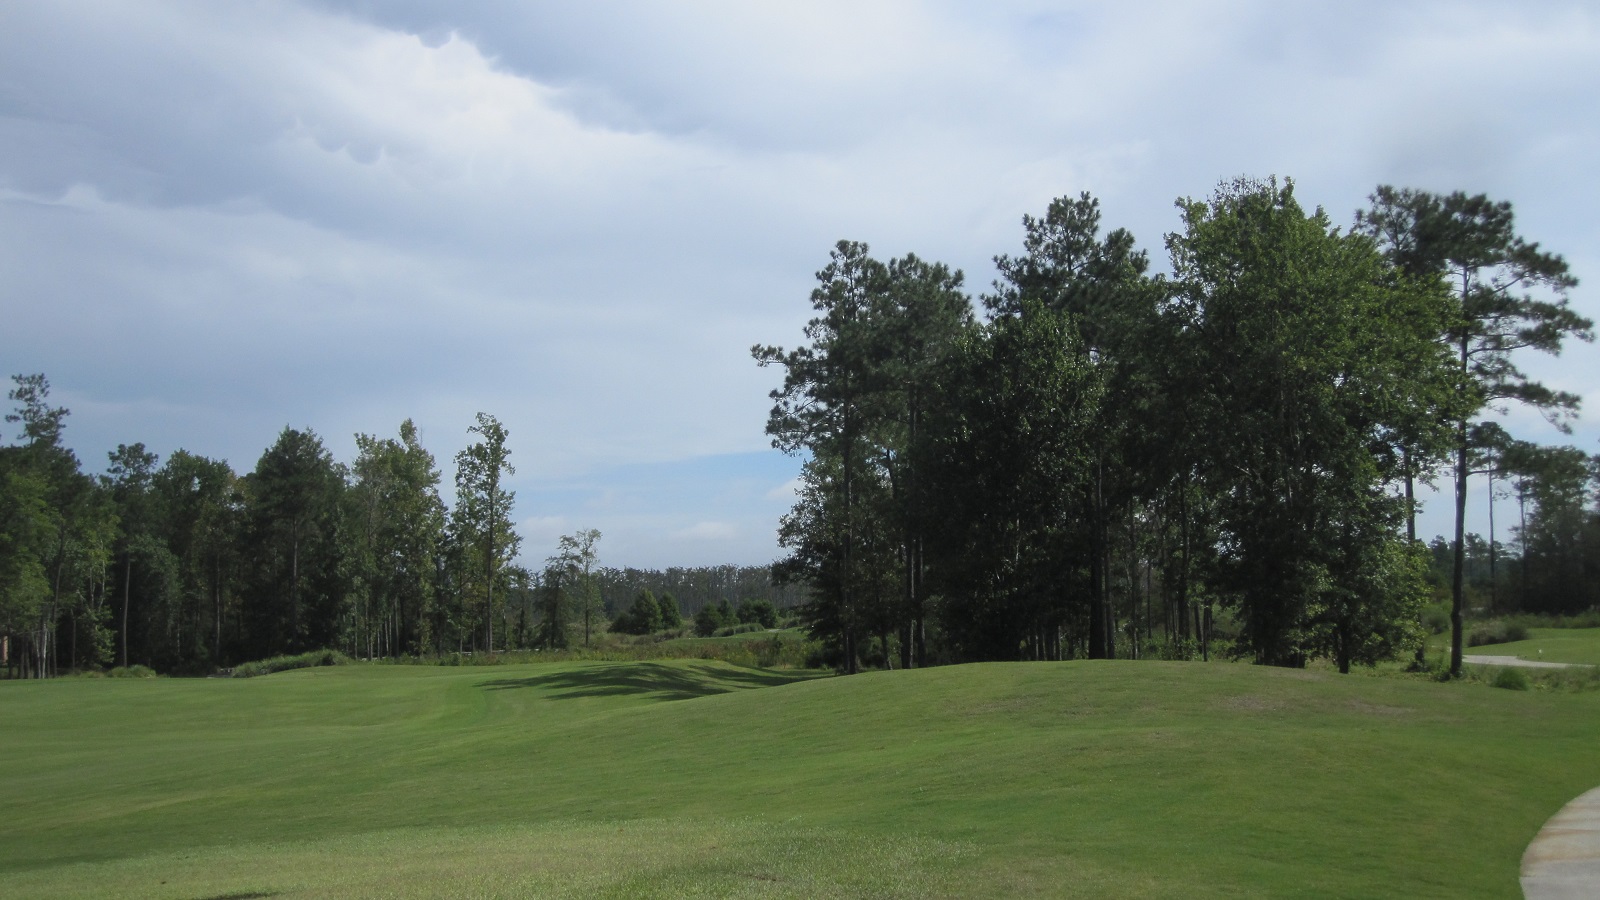 golf course at Leland NC